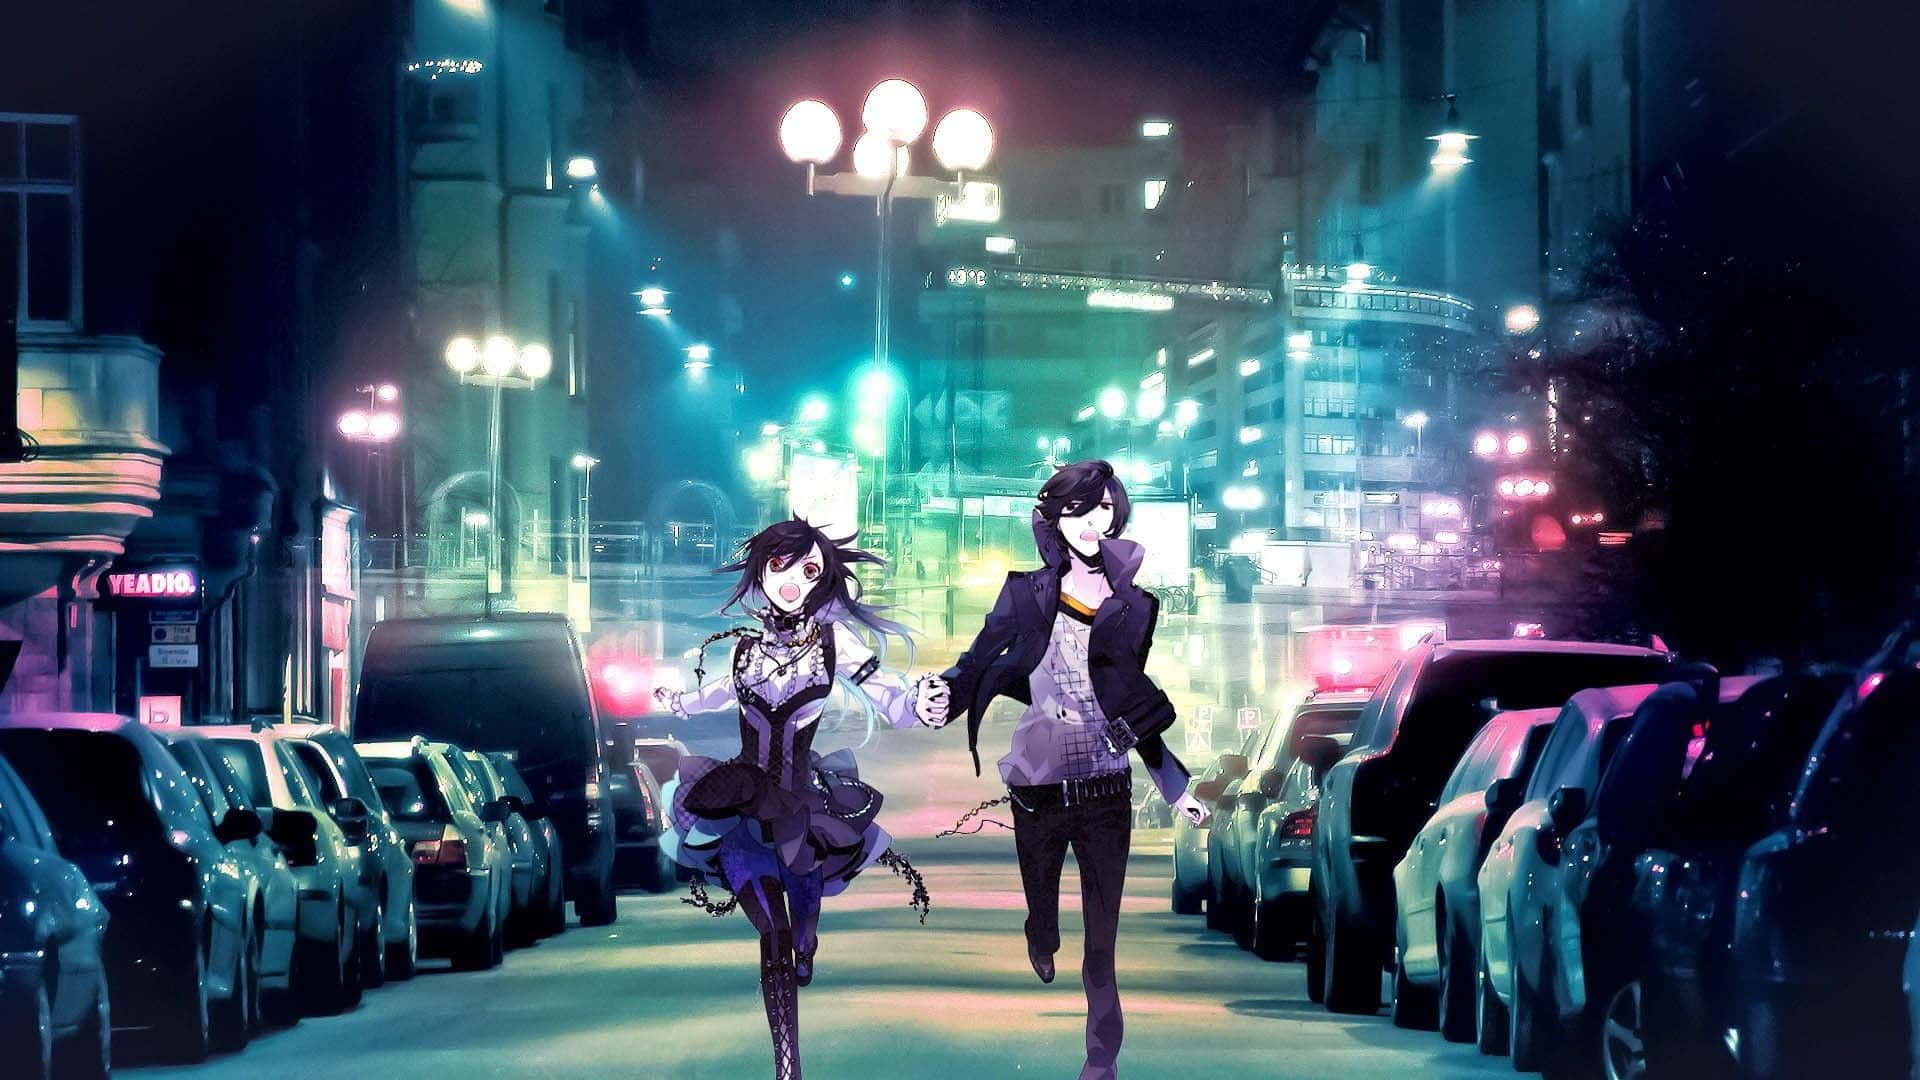 Two Anime Girls Walking Down A Street At Night